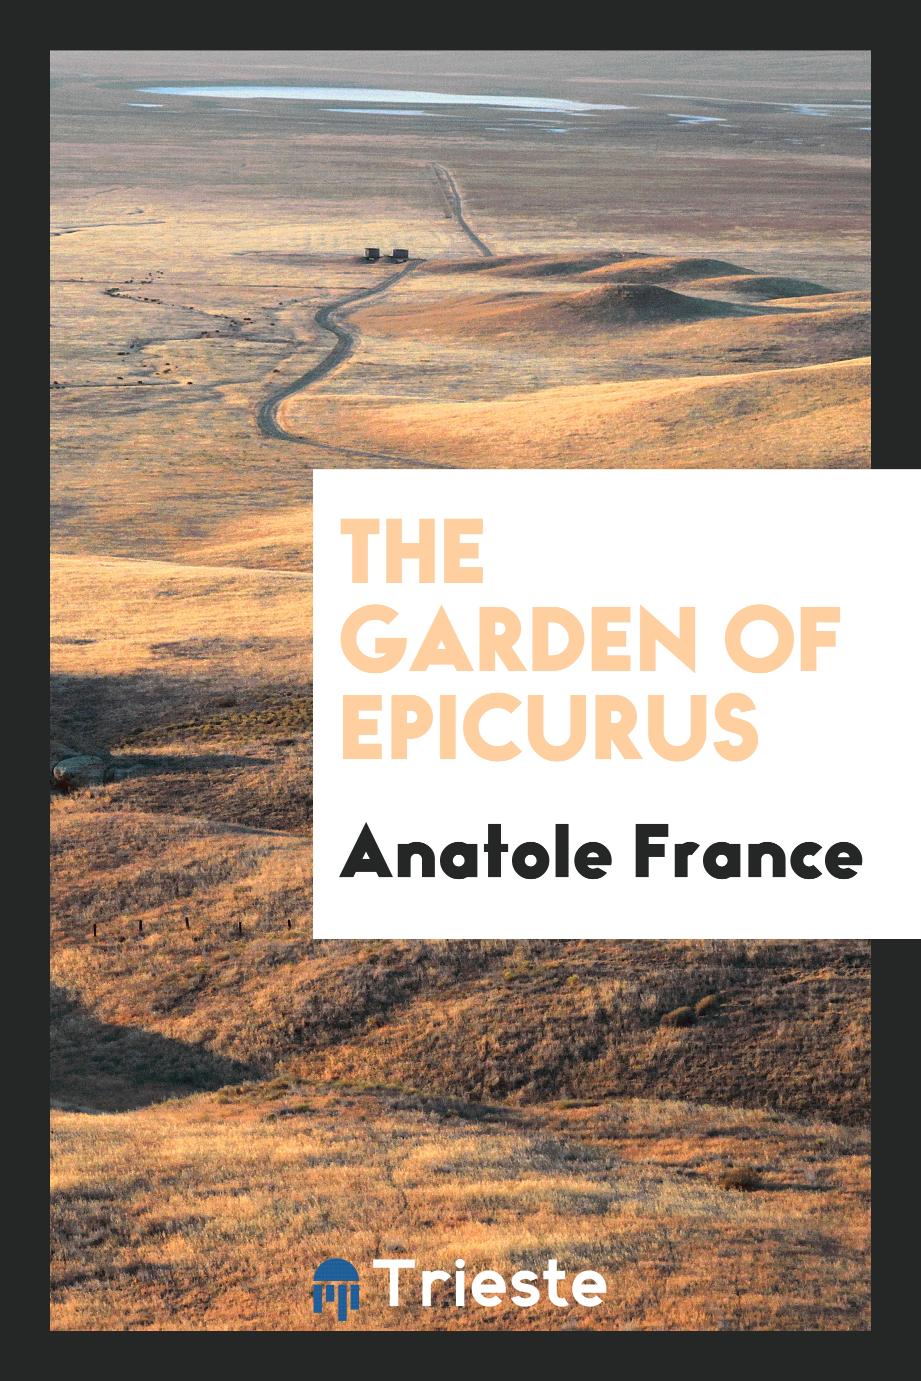 The garden of Epicurus